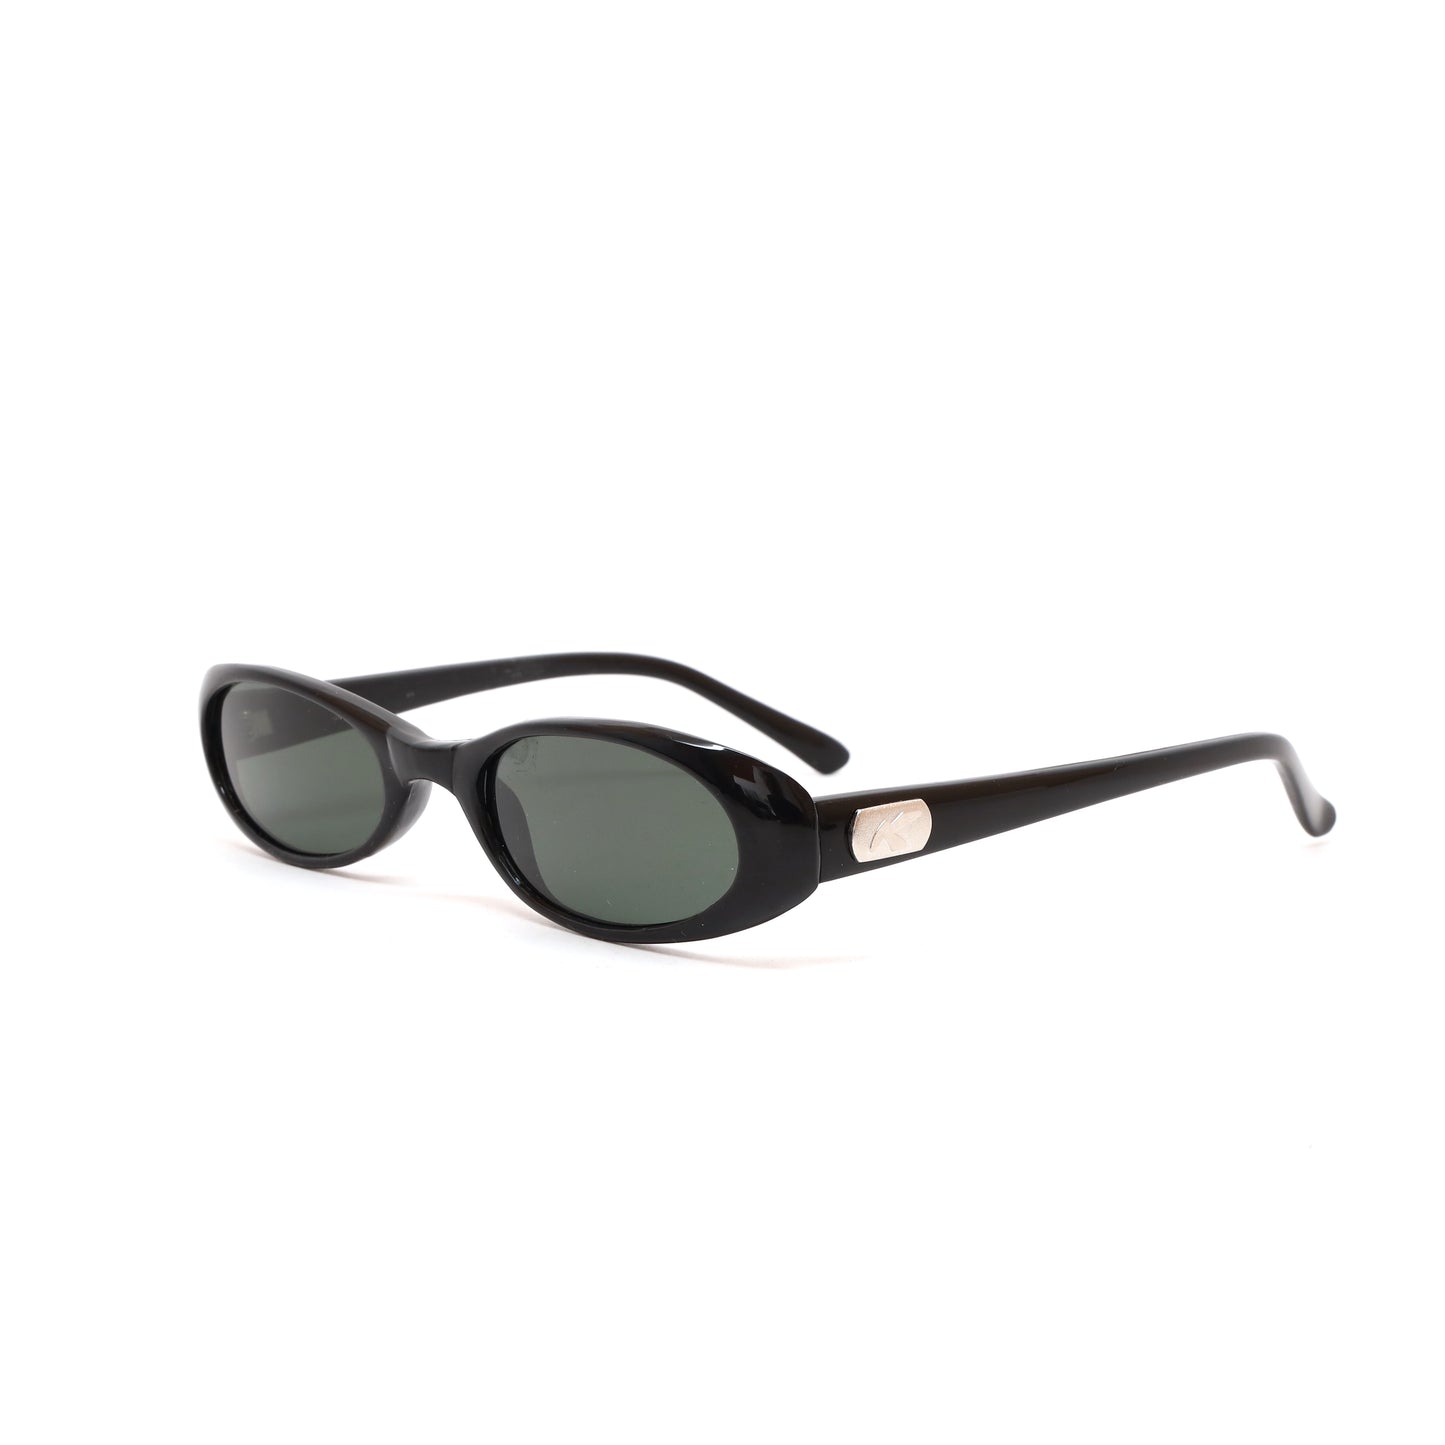 Vintage Small Size 90s Deadstock Jane Original Oval Sunglasses - Black